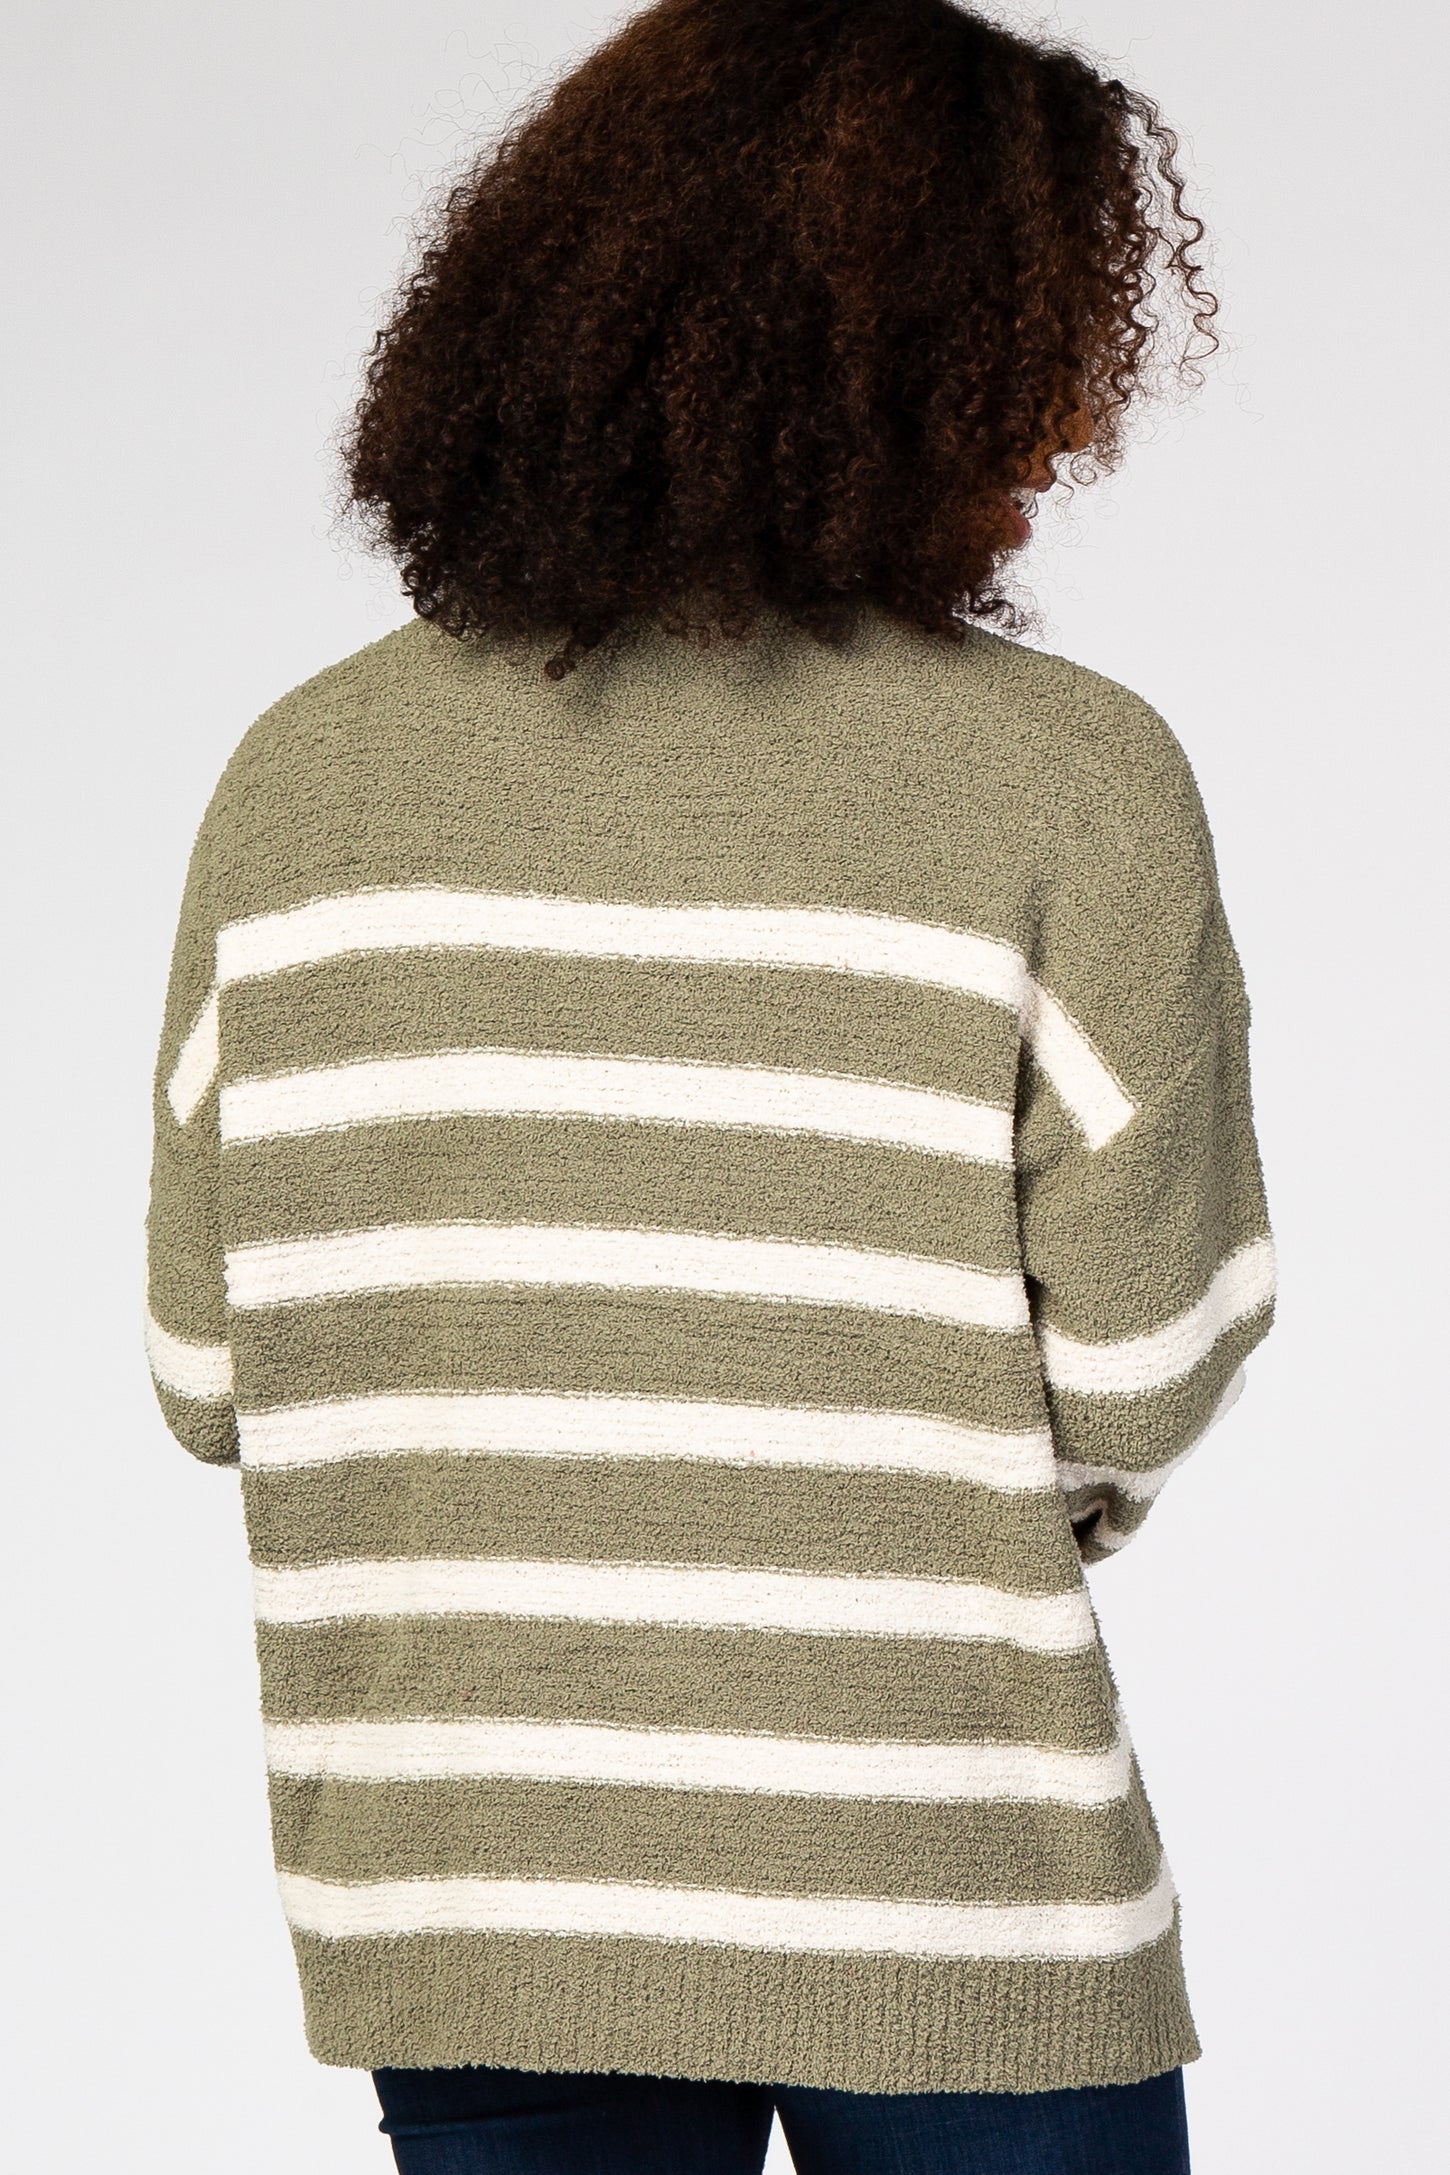 Olive Striped Fuzzy Knit Sweater